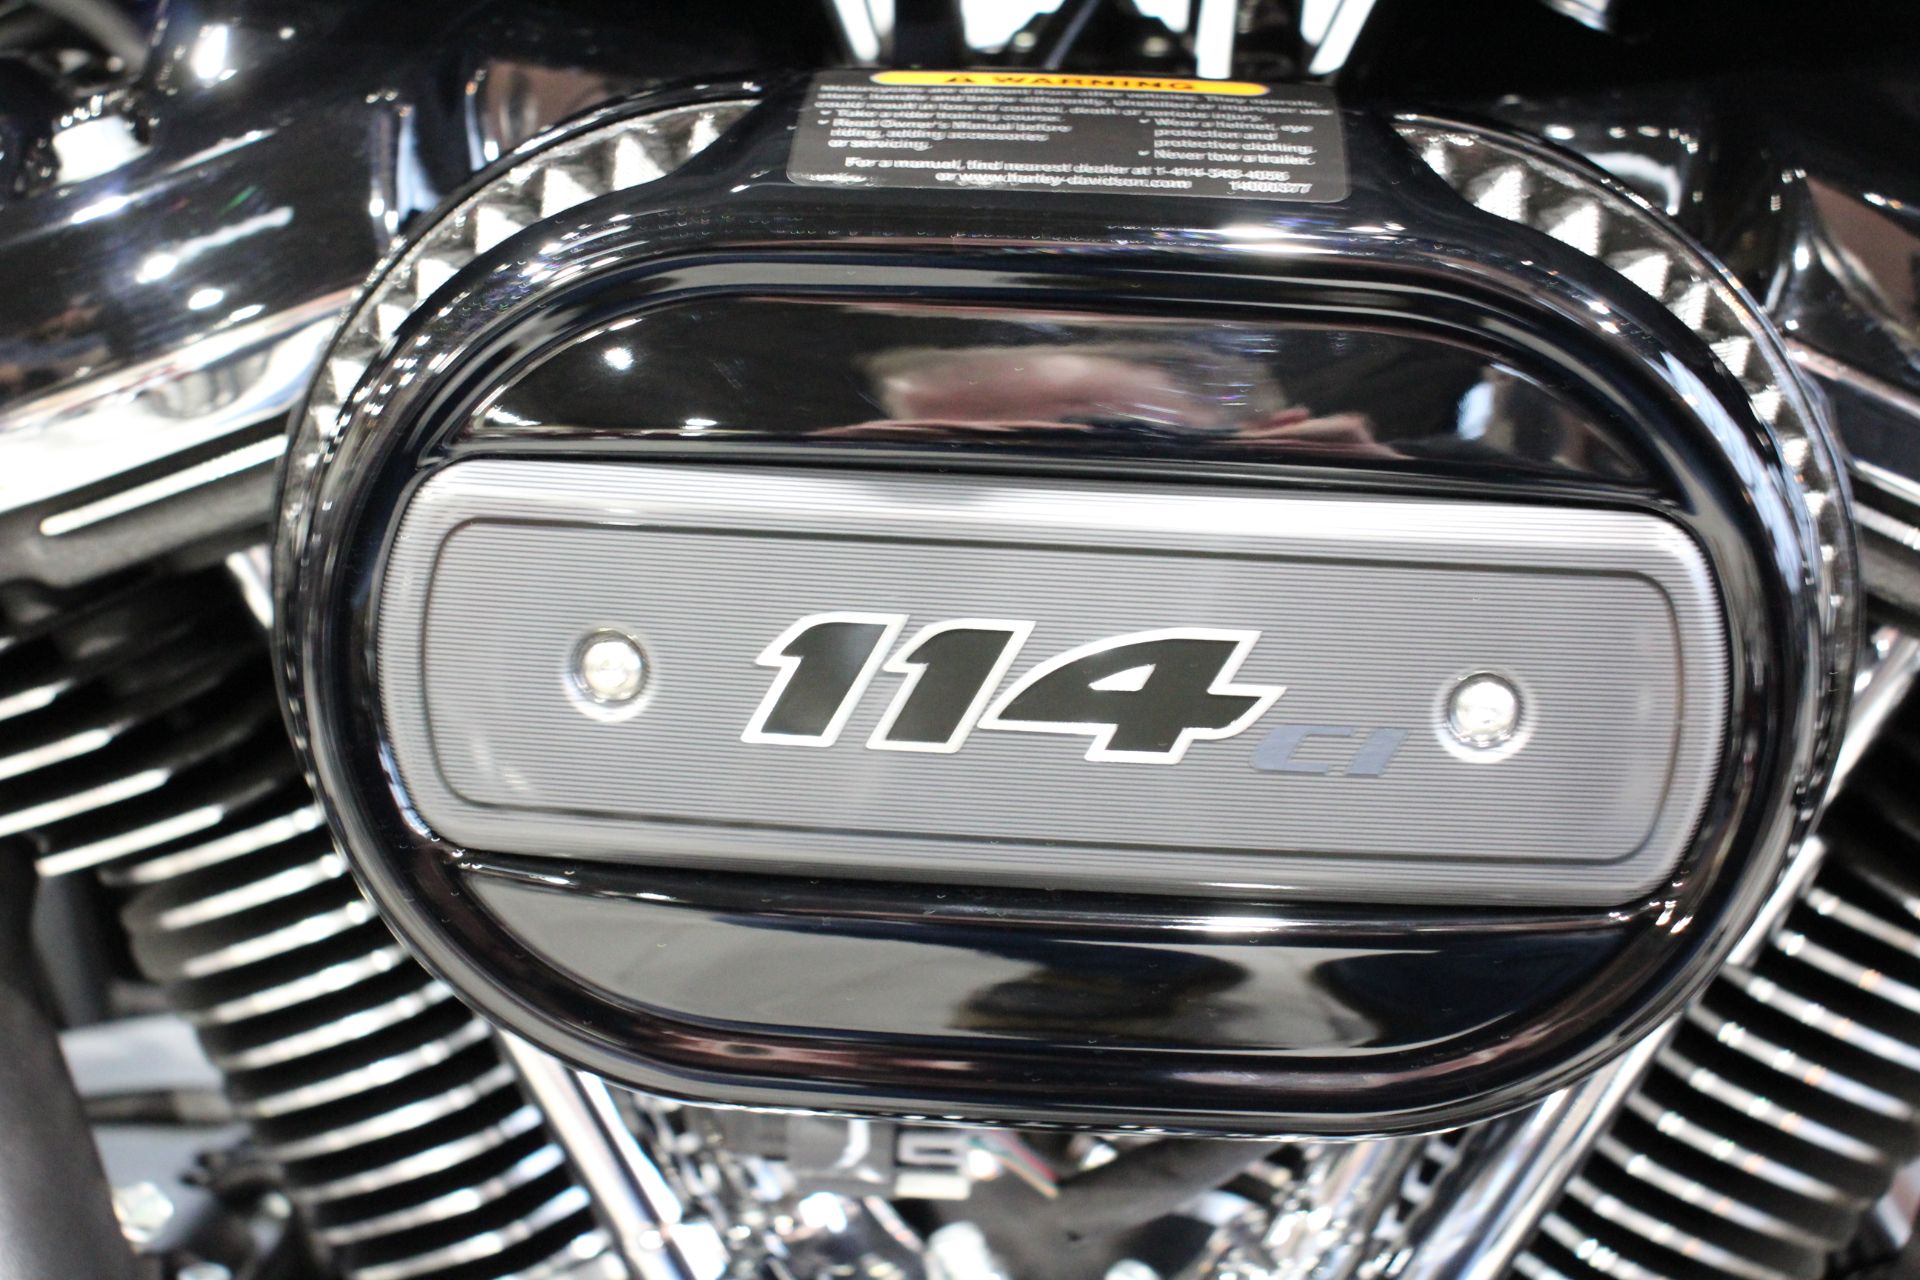 2022 Harley-Davidson Street Glide® Special in Flint, Michigan - Photo 10